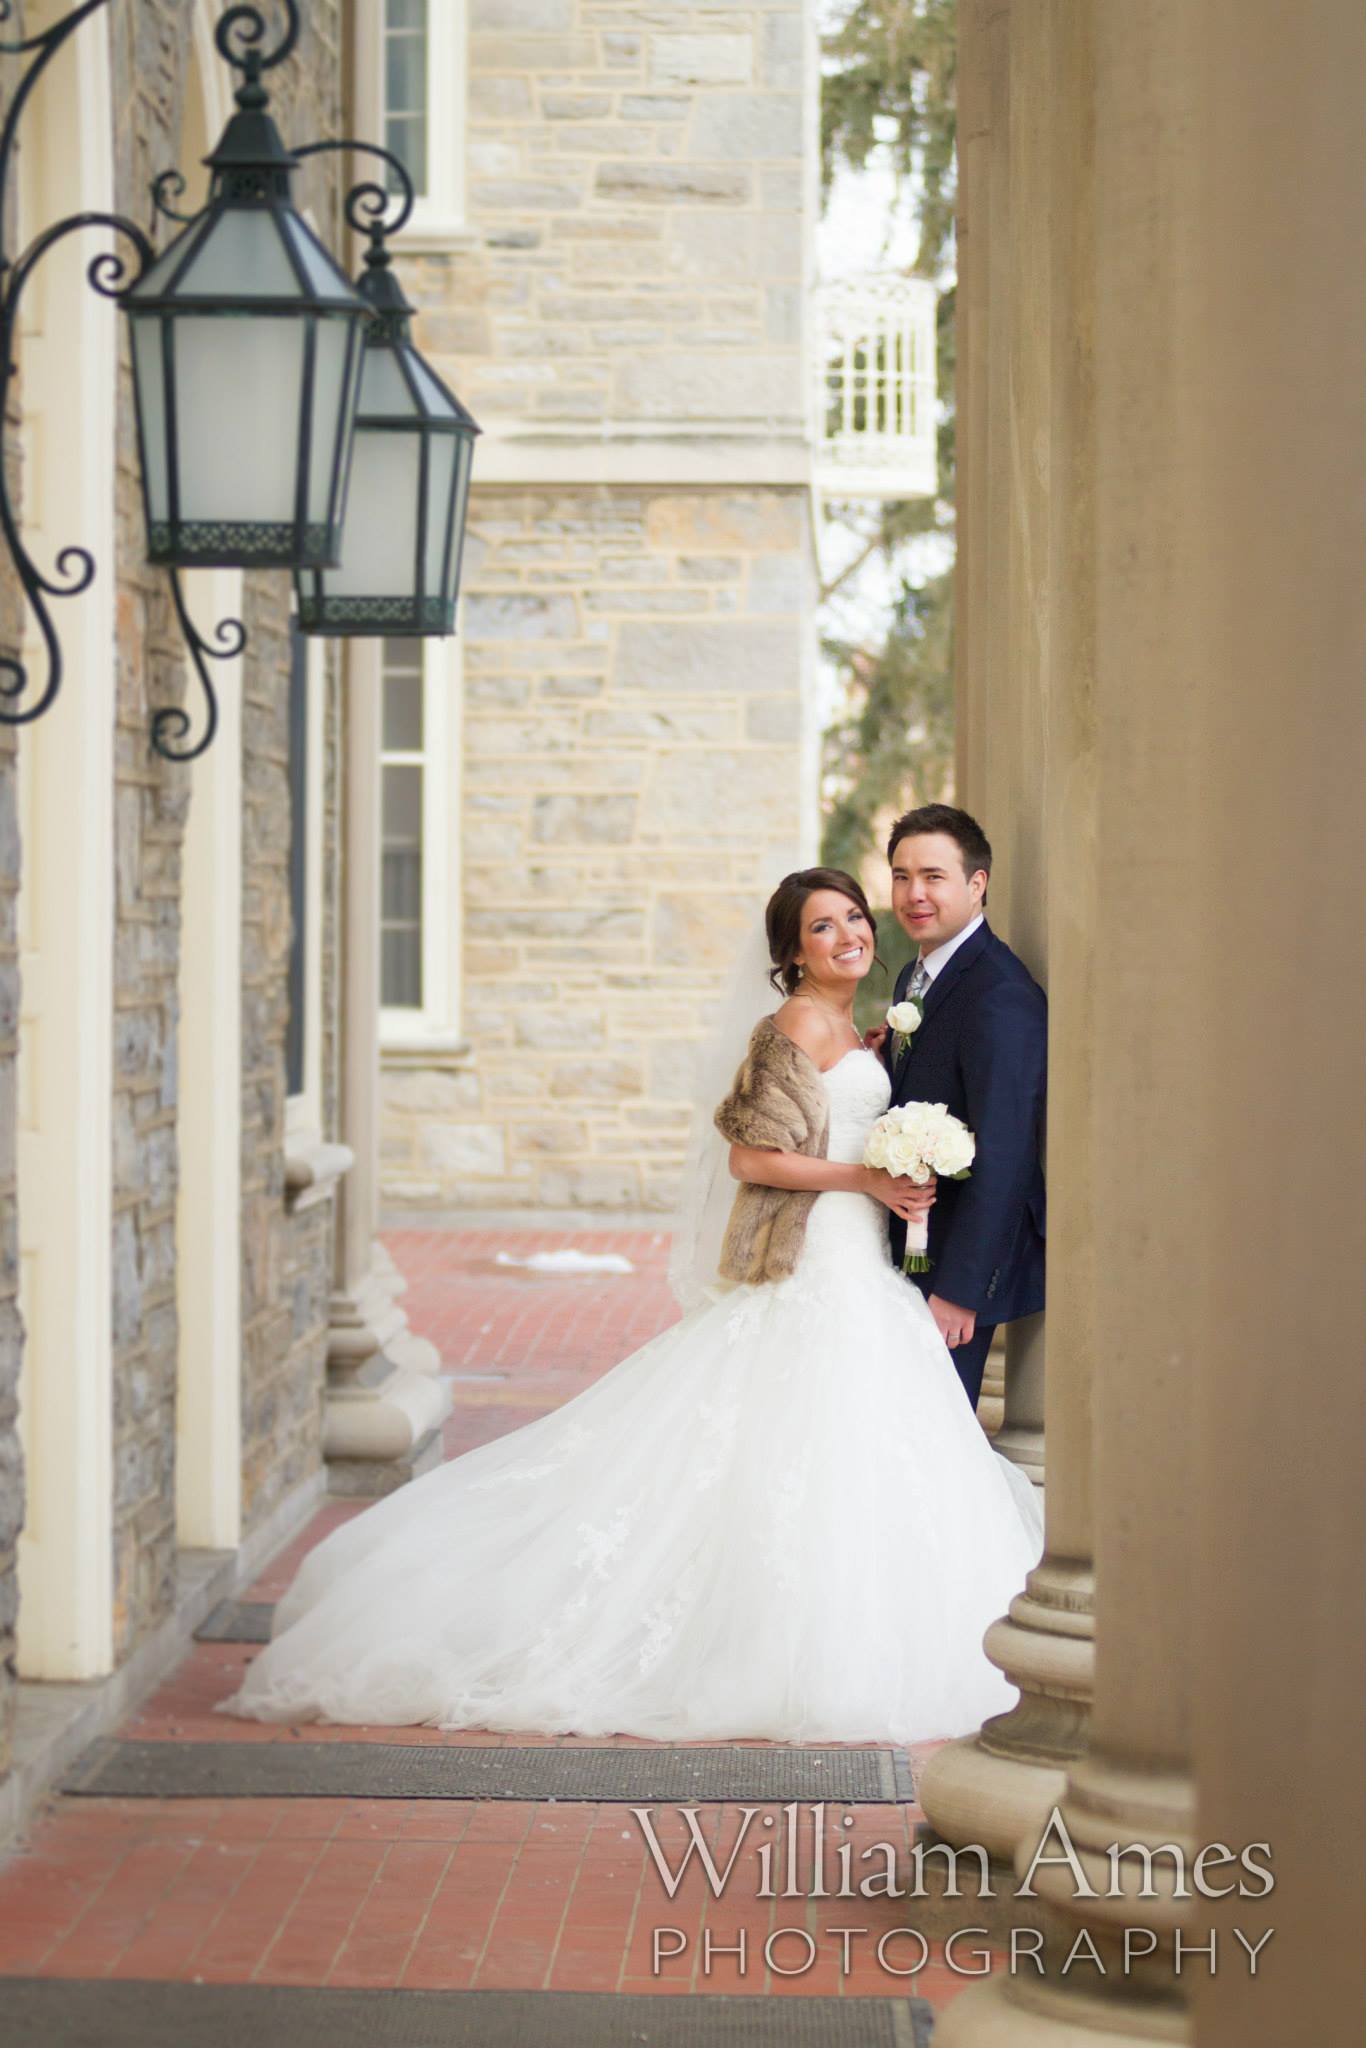 Penn State Wedding photo at Old Main Columns